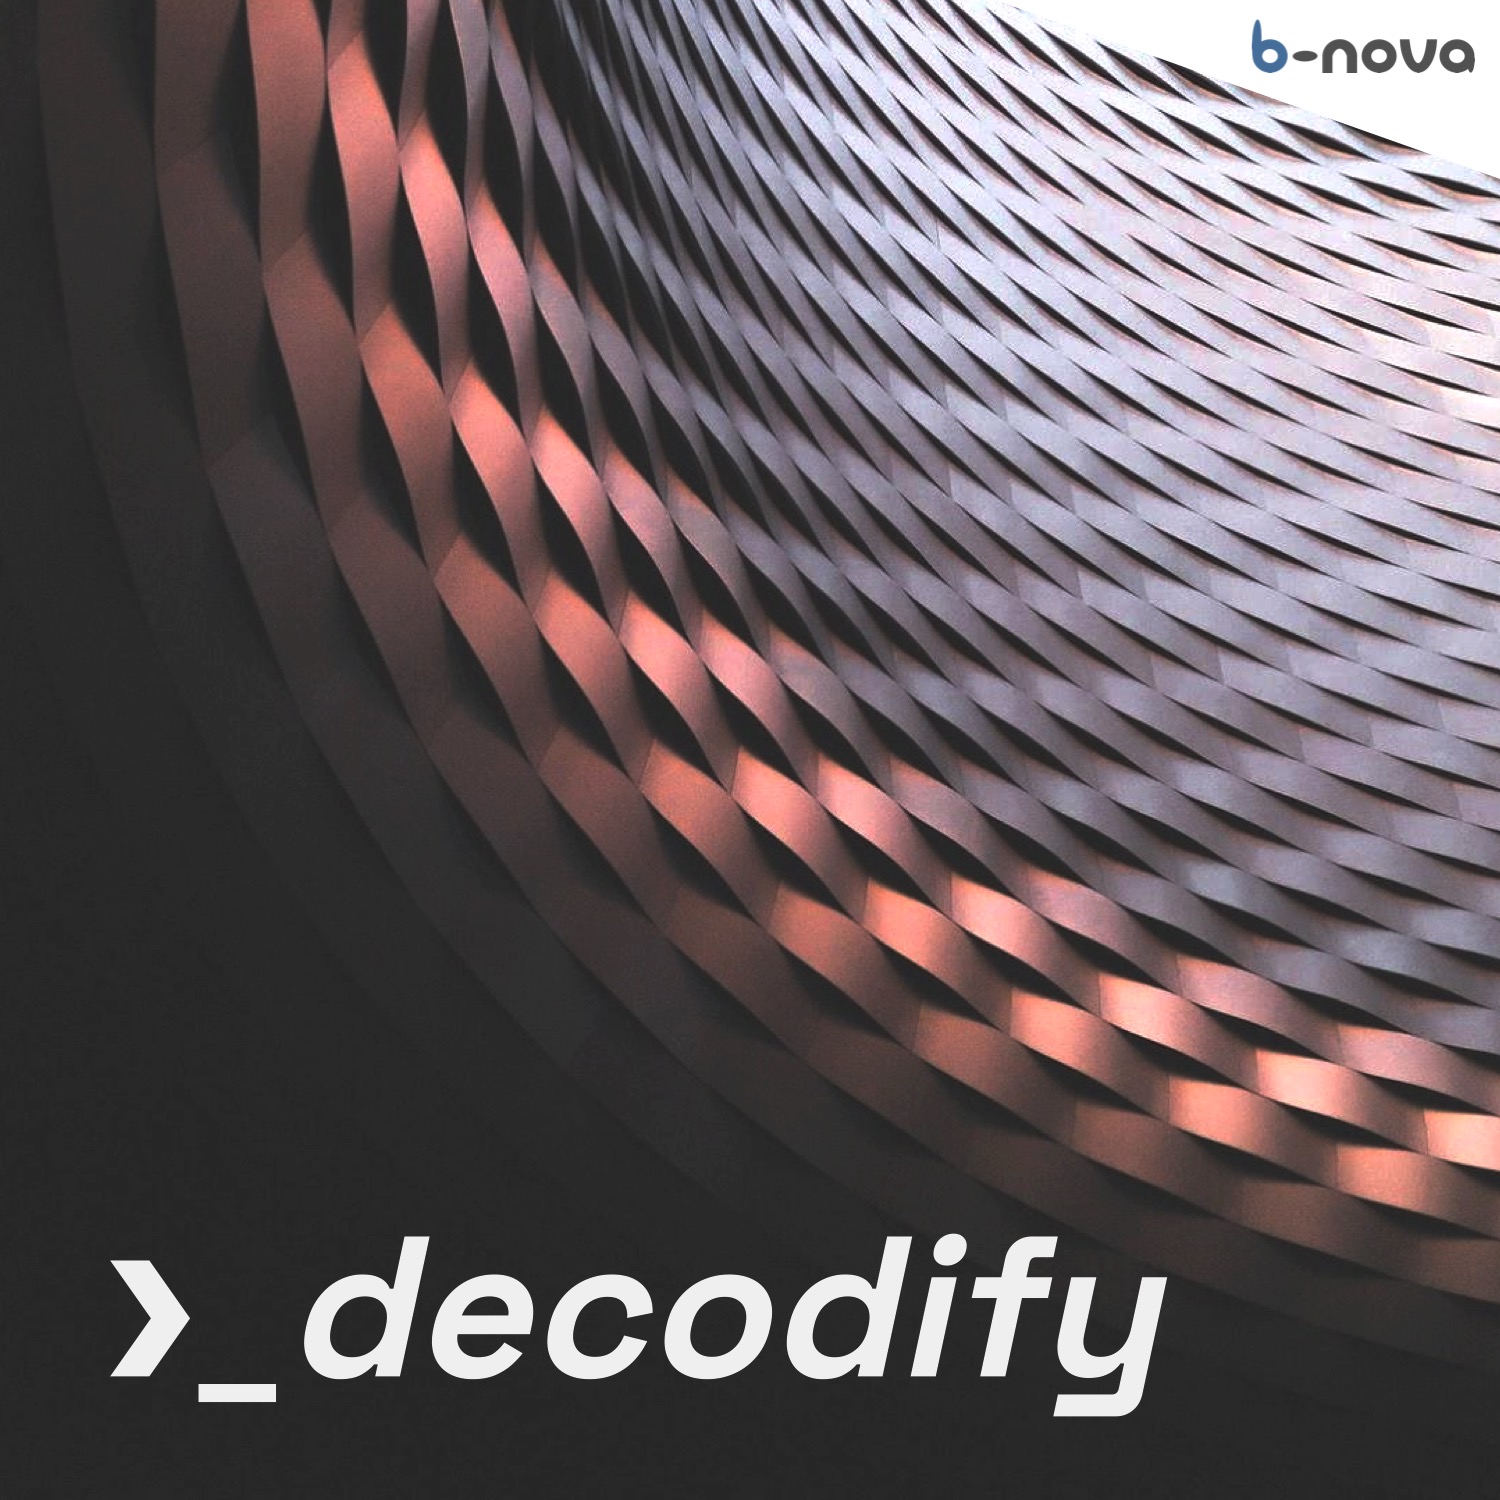 decodify – tech up with b-nova.